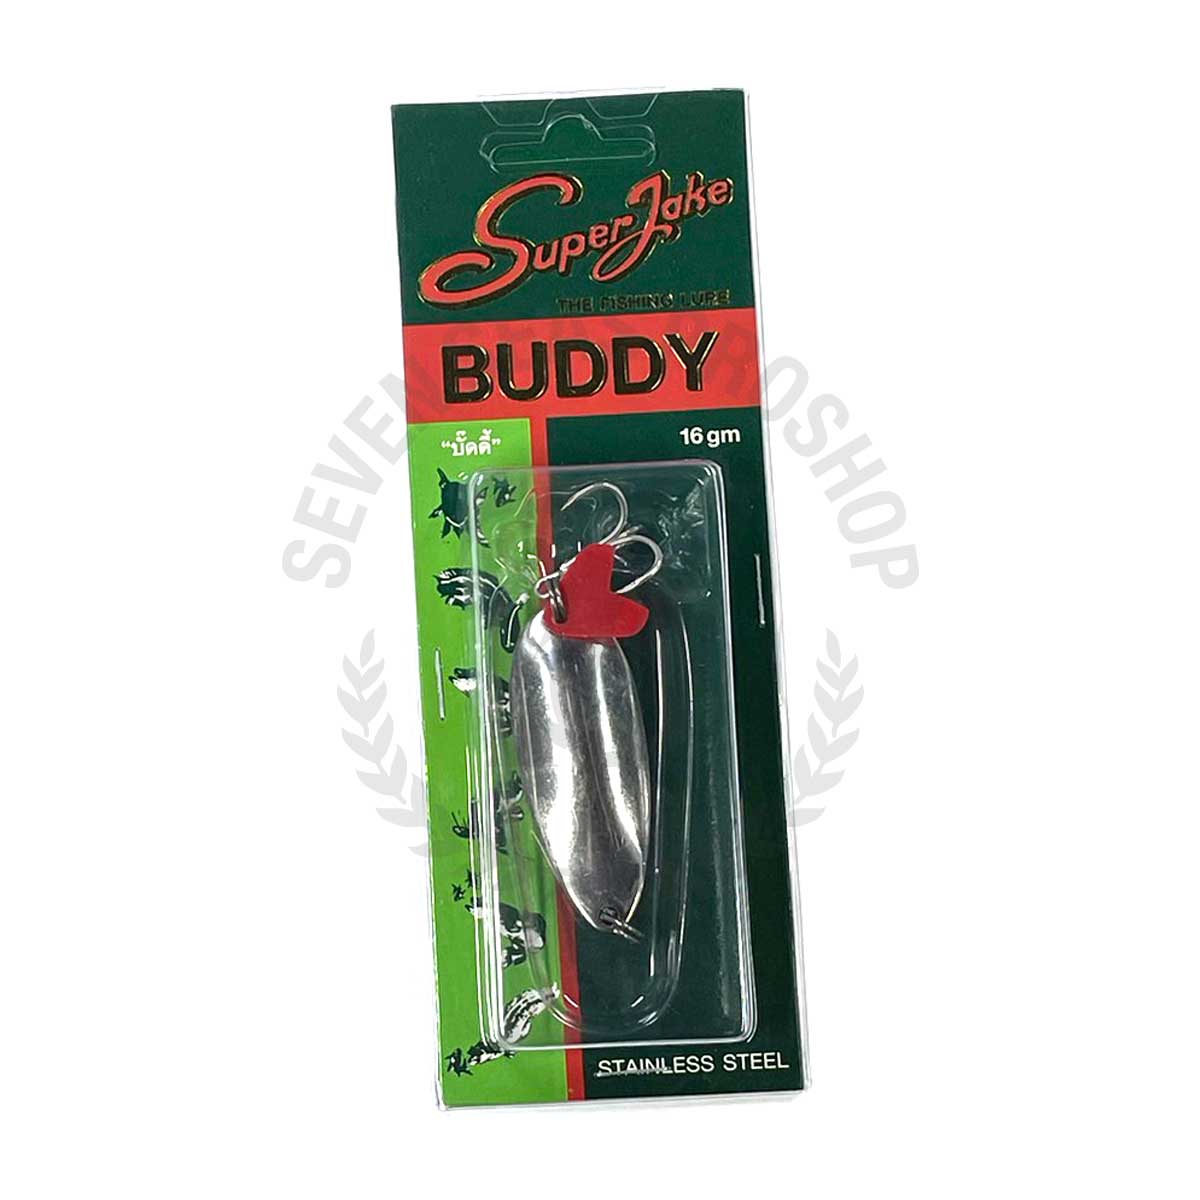 Superjake Buddy Spoon 16g #Silver*เหยื่อสปูน - 7 SEAS PROSHOP (THAILAND)